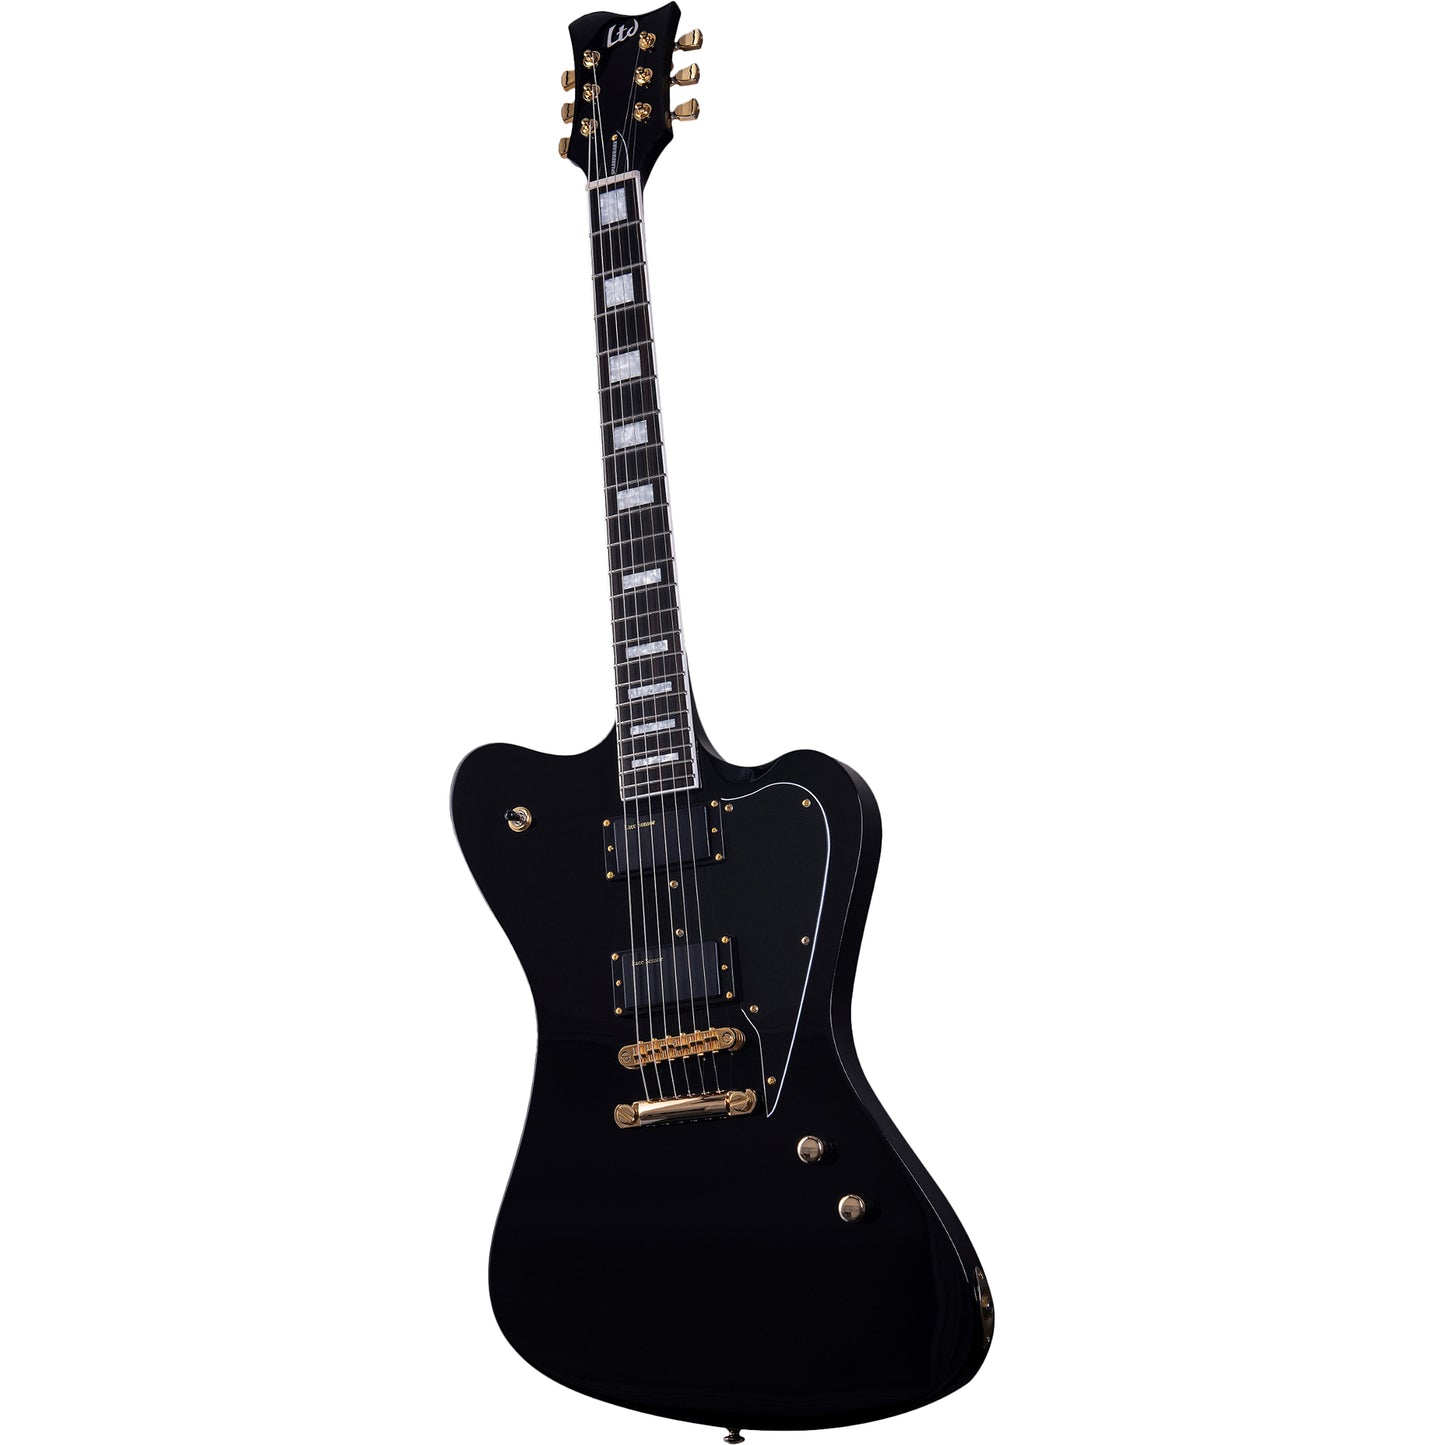 ESP LTD Bill Kelliher Signature Sparrowhawk Electric Guitar in Black